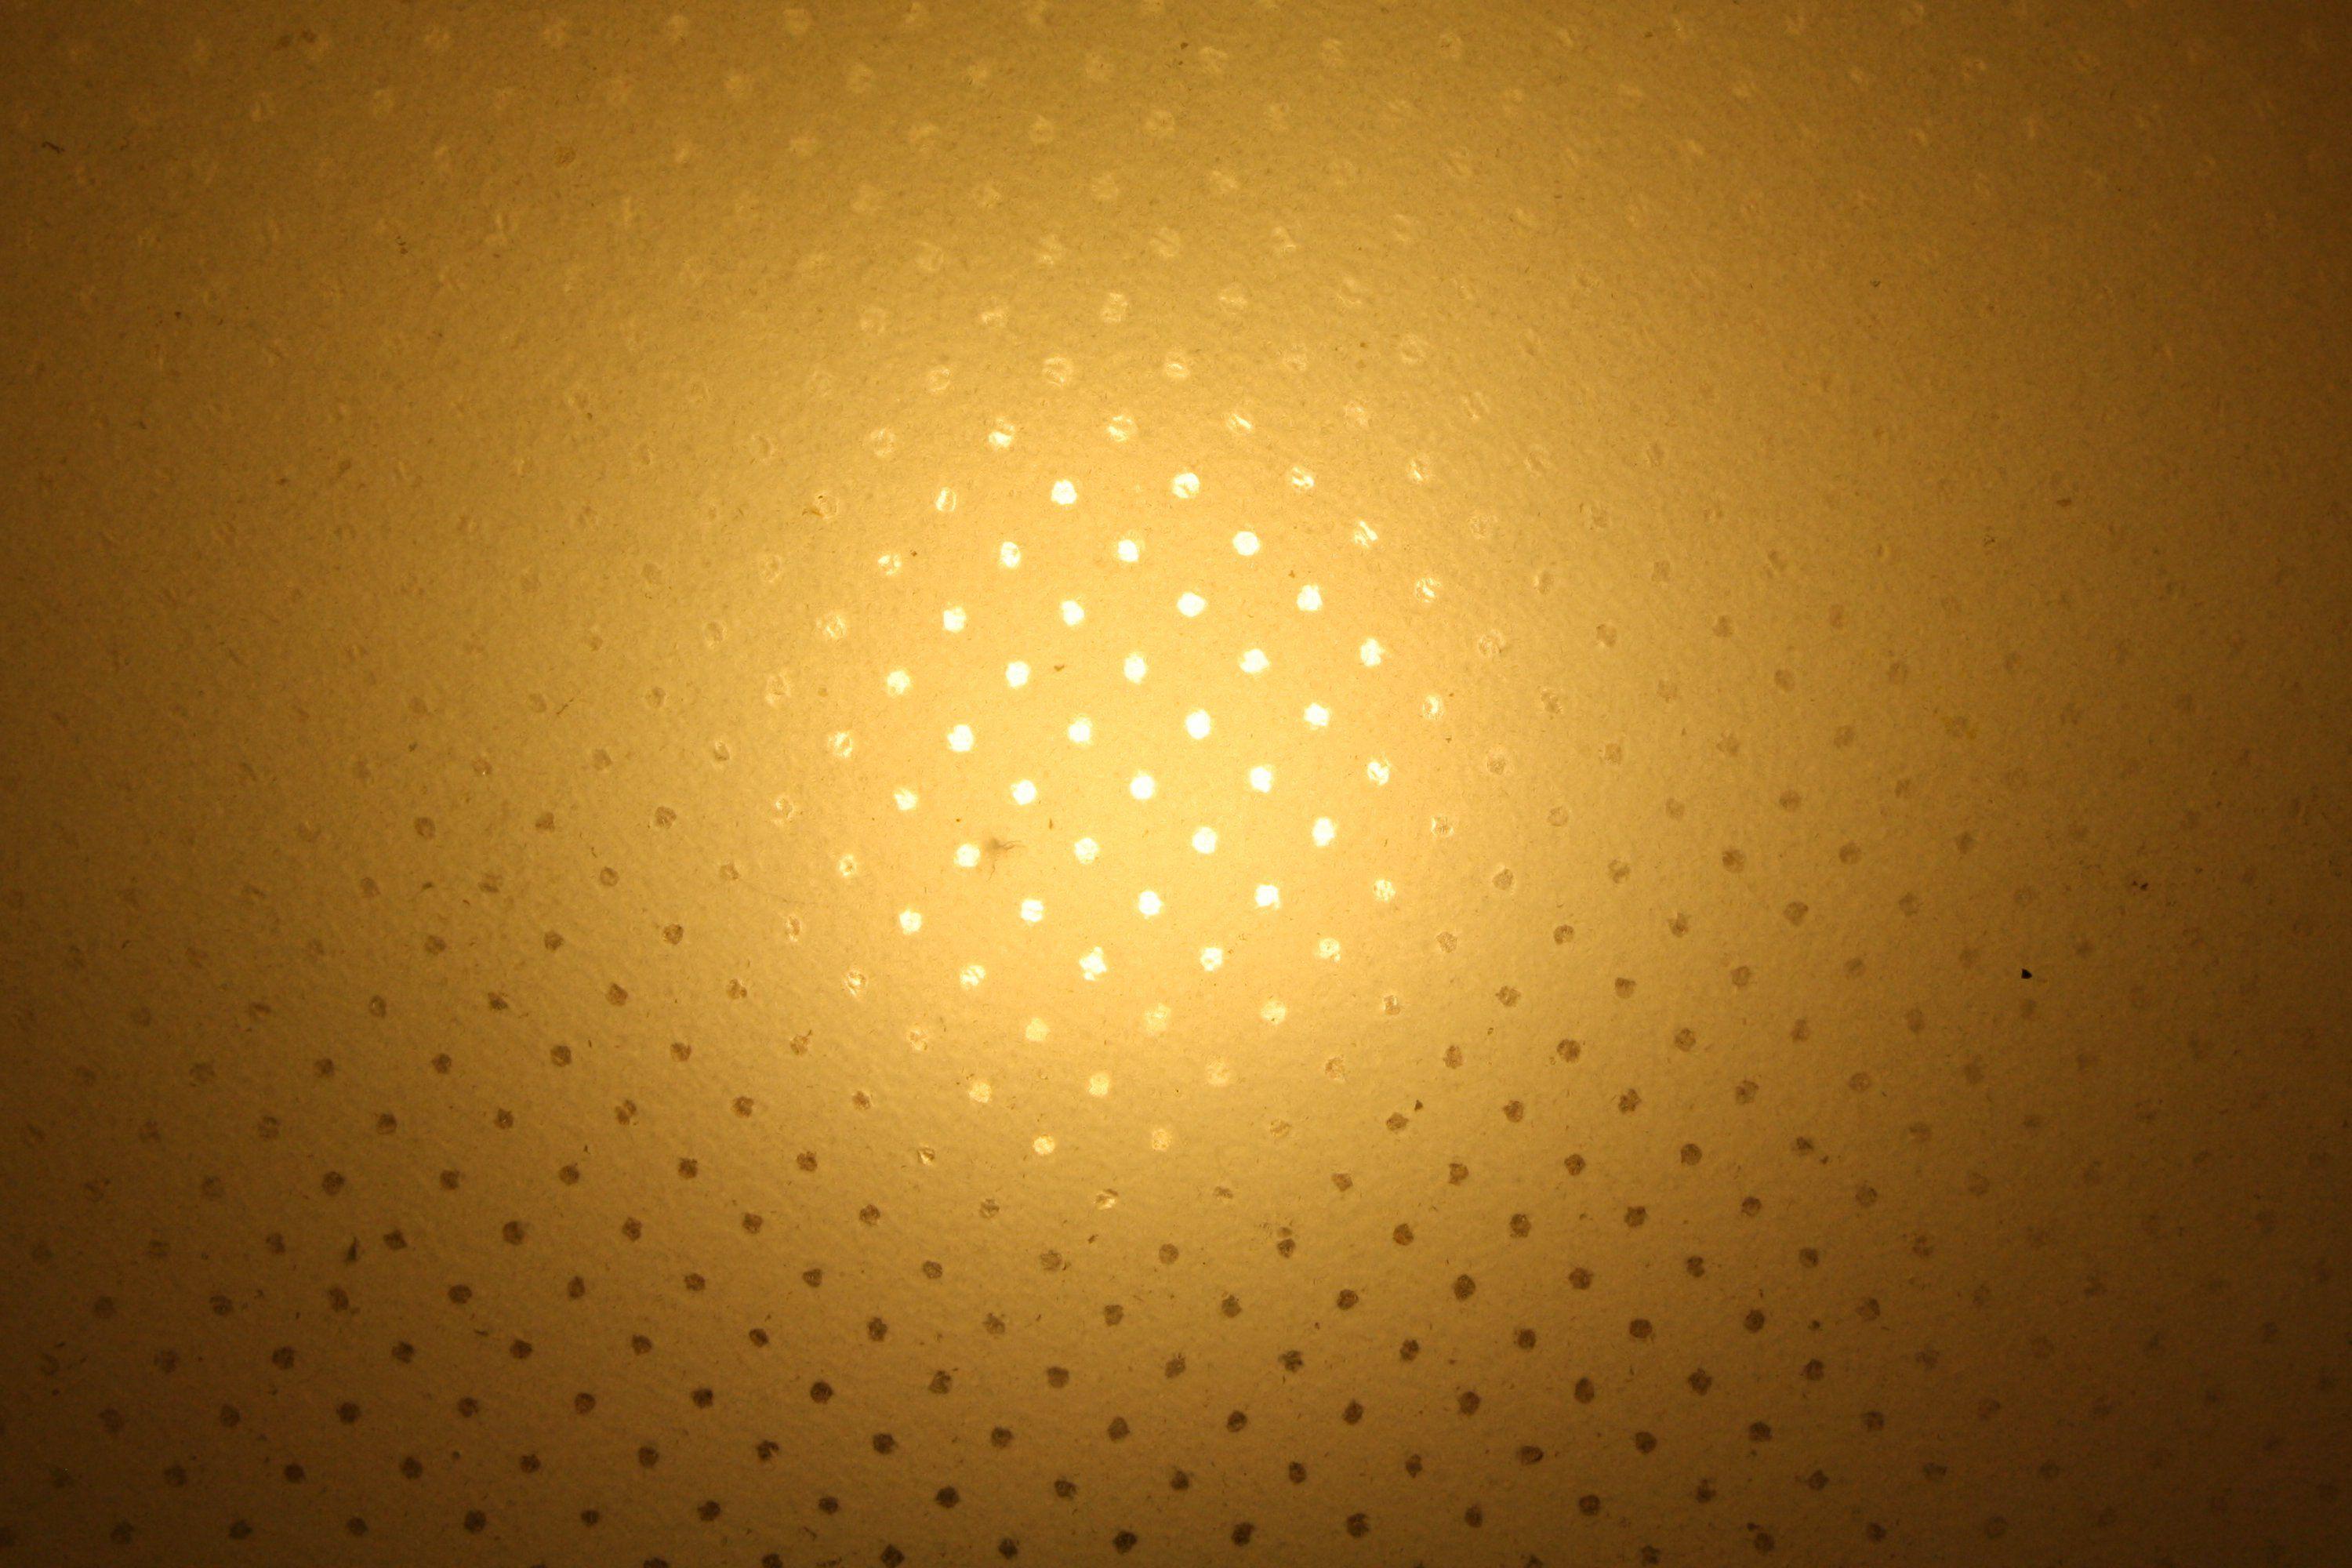 light gold background